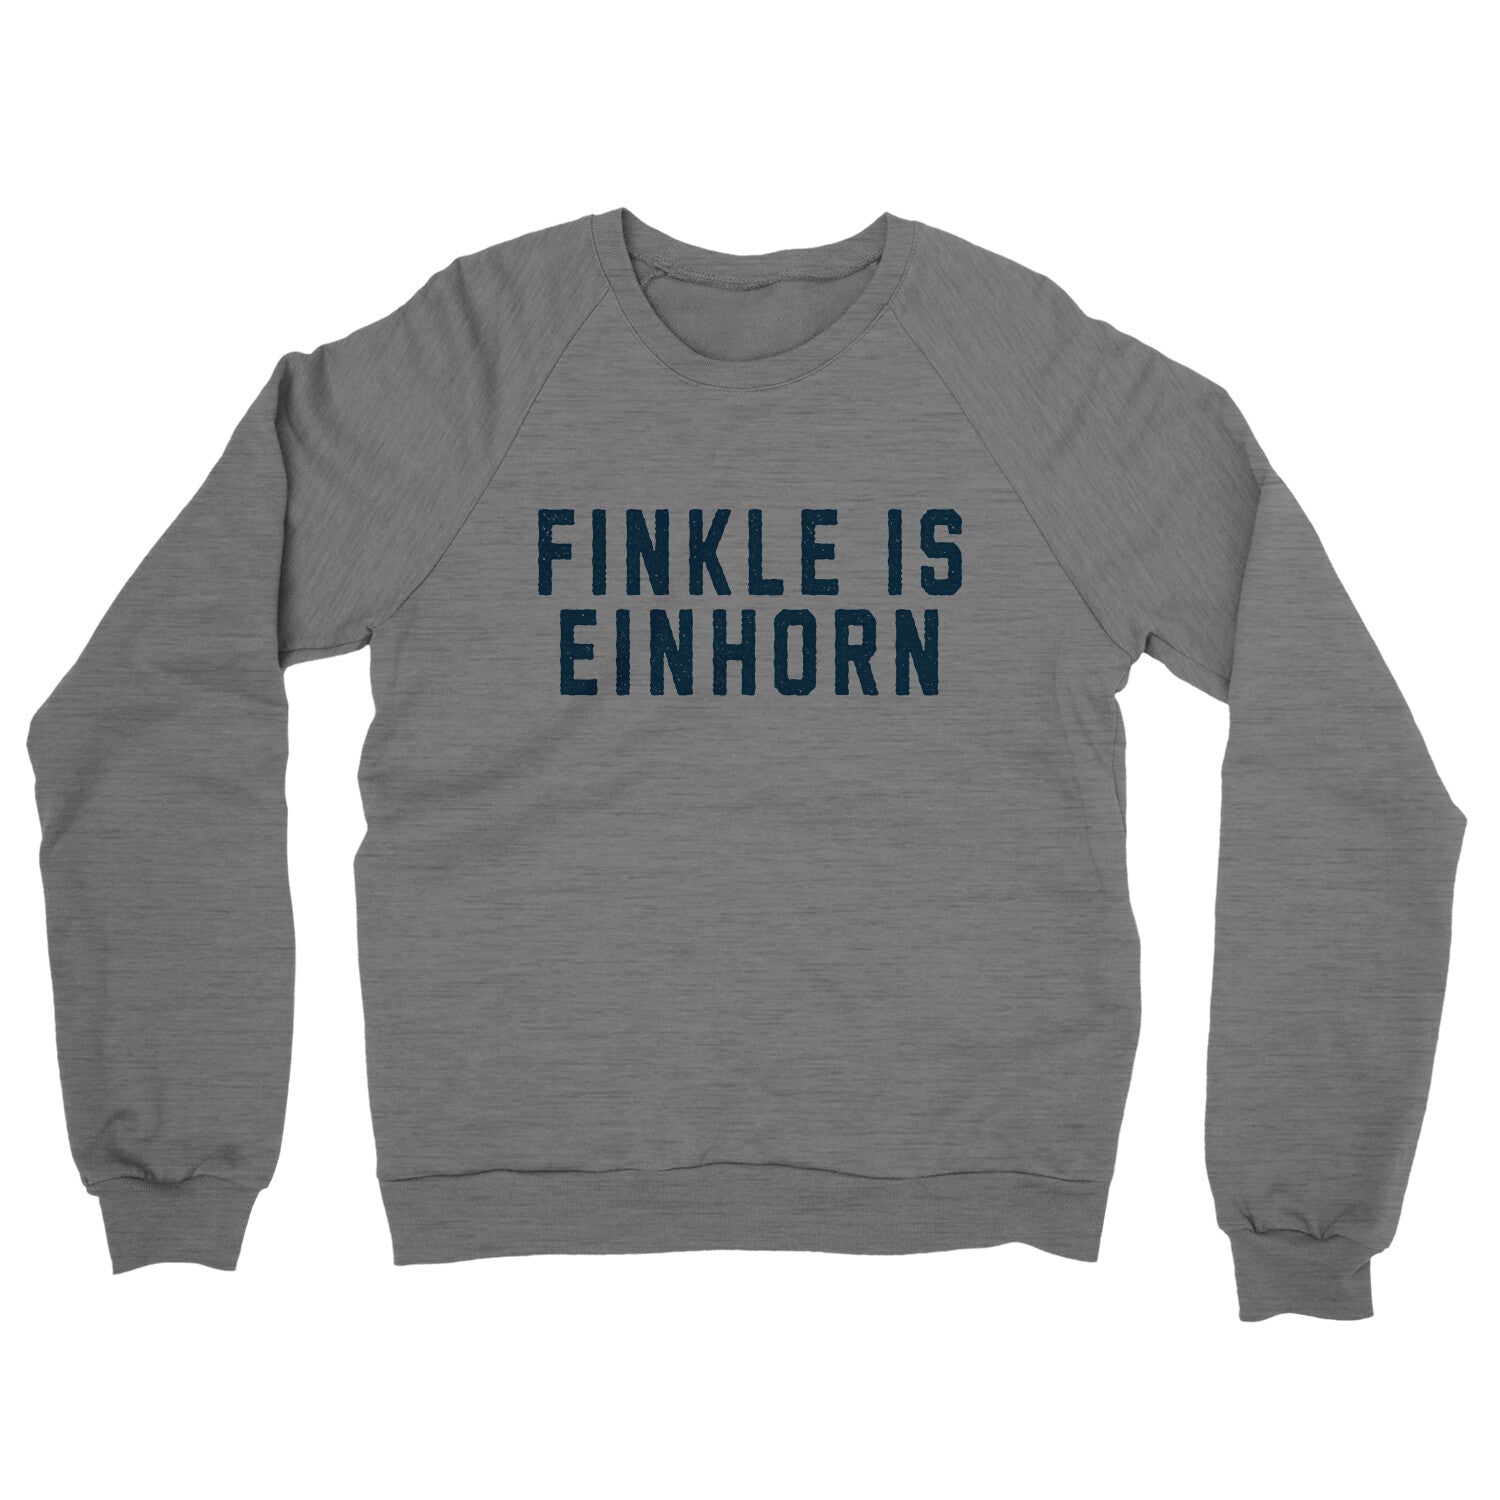 Finkle is Einhorn in Graphite Heather Color